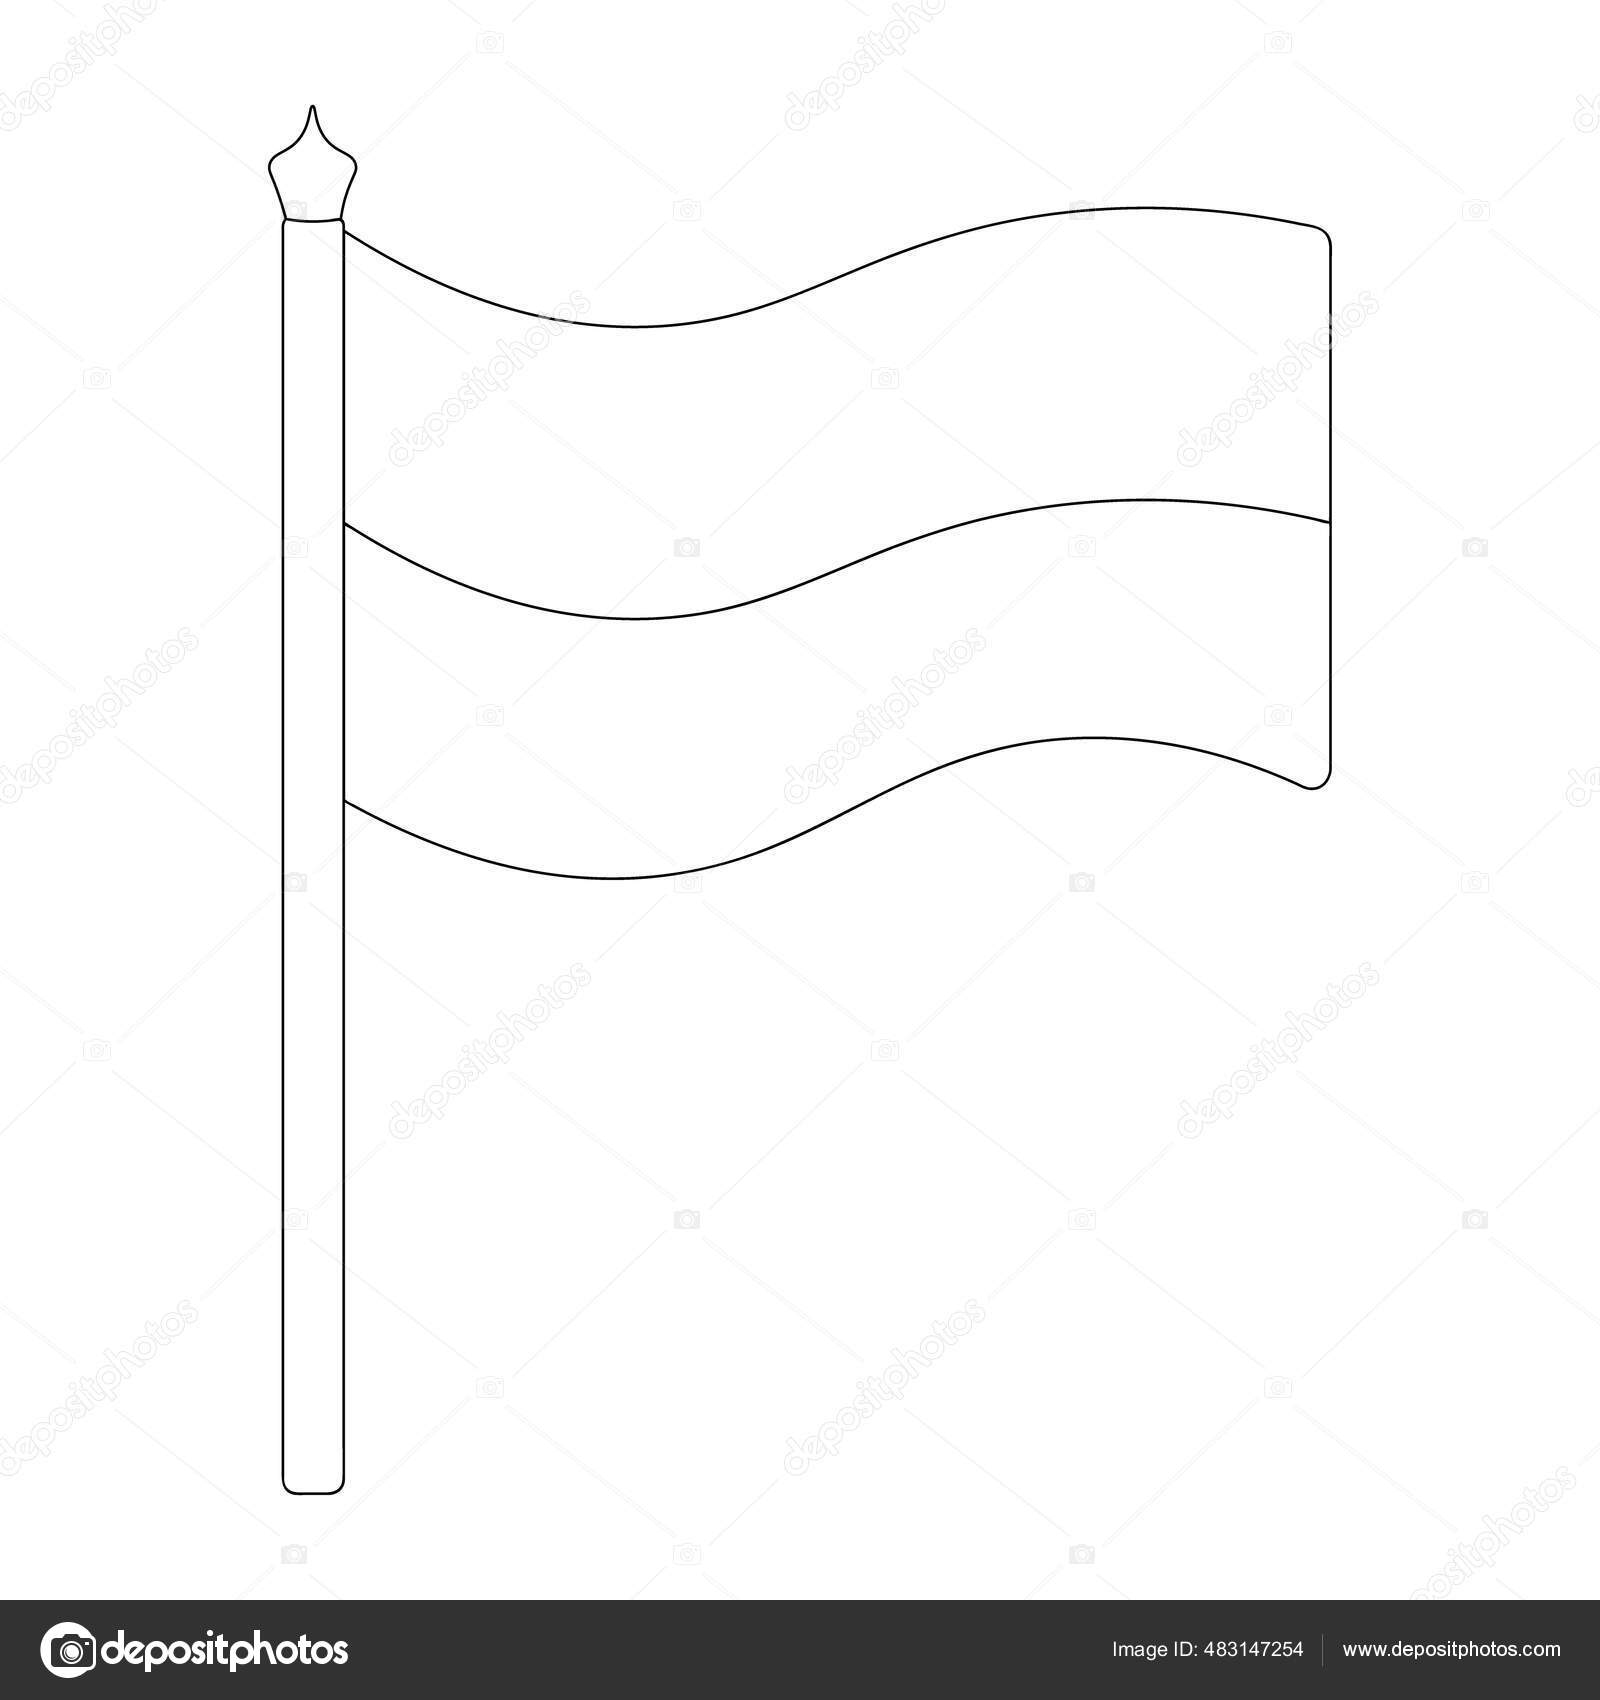 https://st2.depositphotos.com/29732180/48314/v/1600/depositphotos_483147254-stock-illustration-flag-ukraine-poland-sketch-vector.jpg